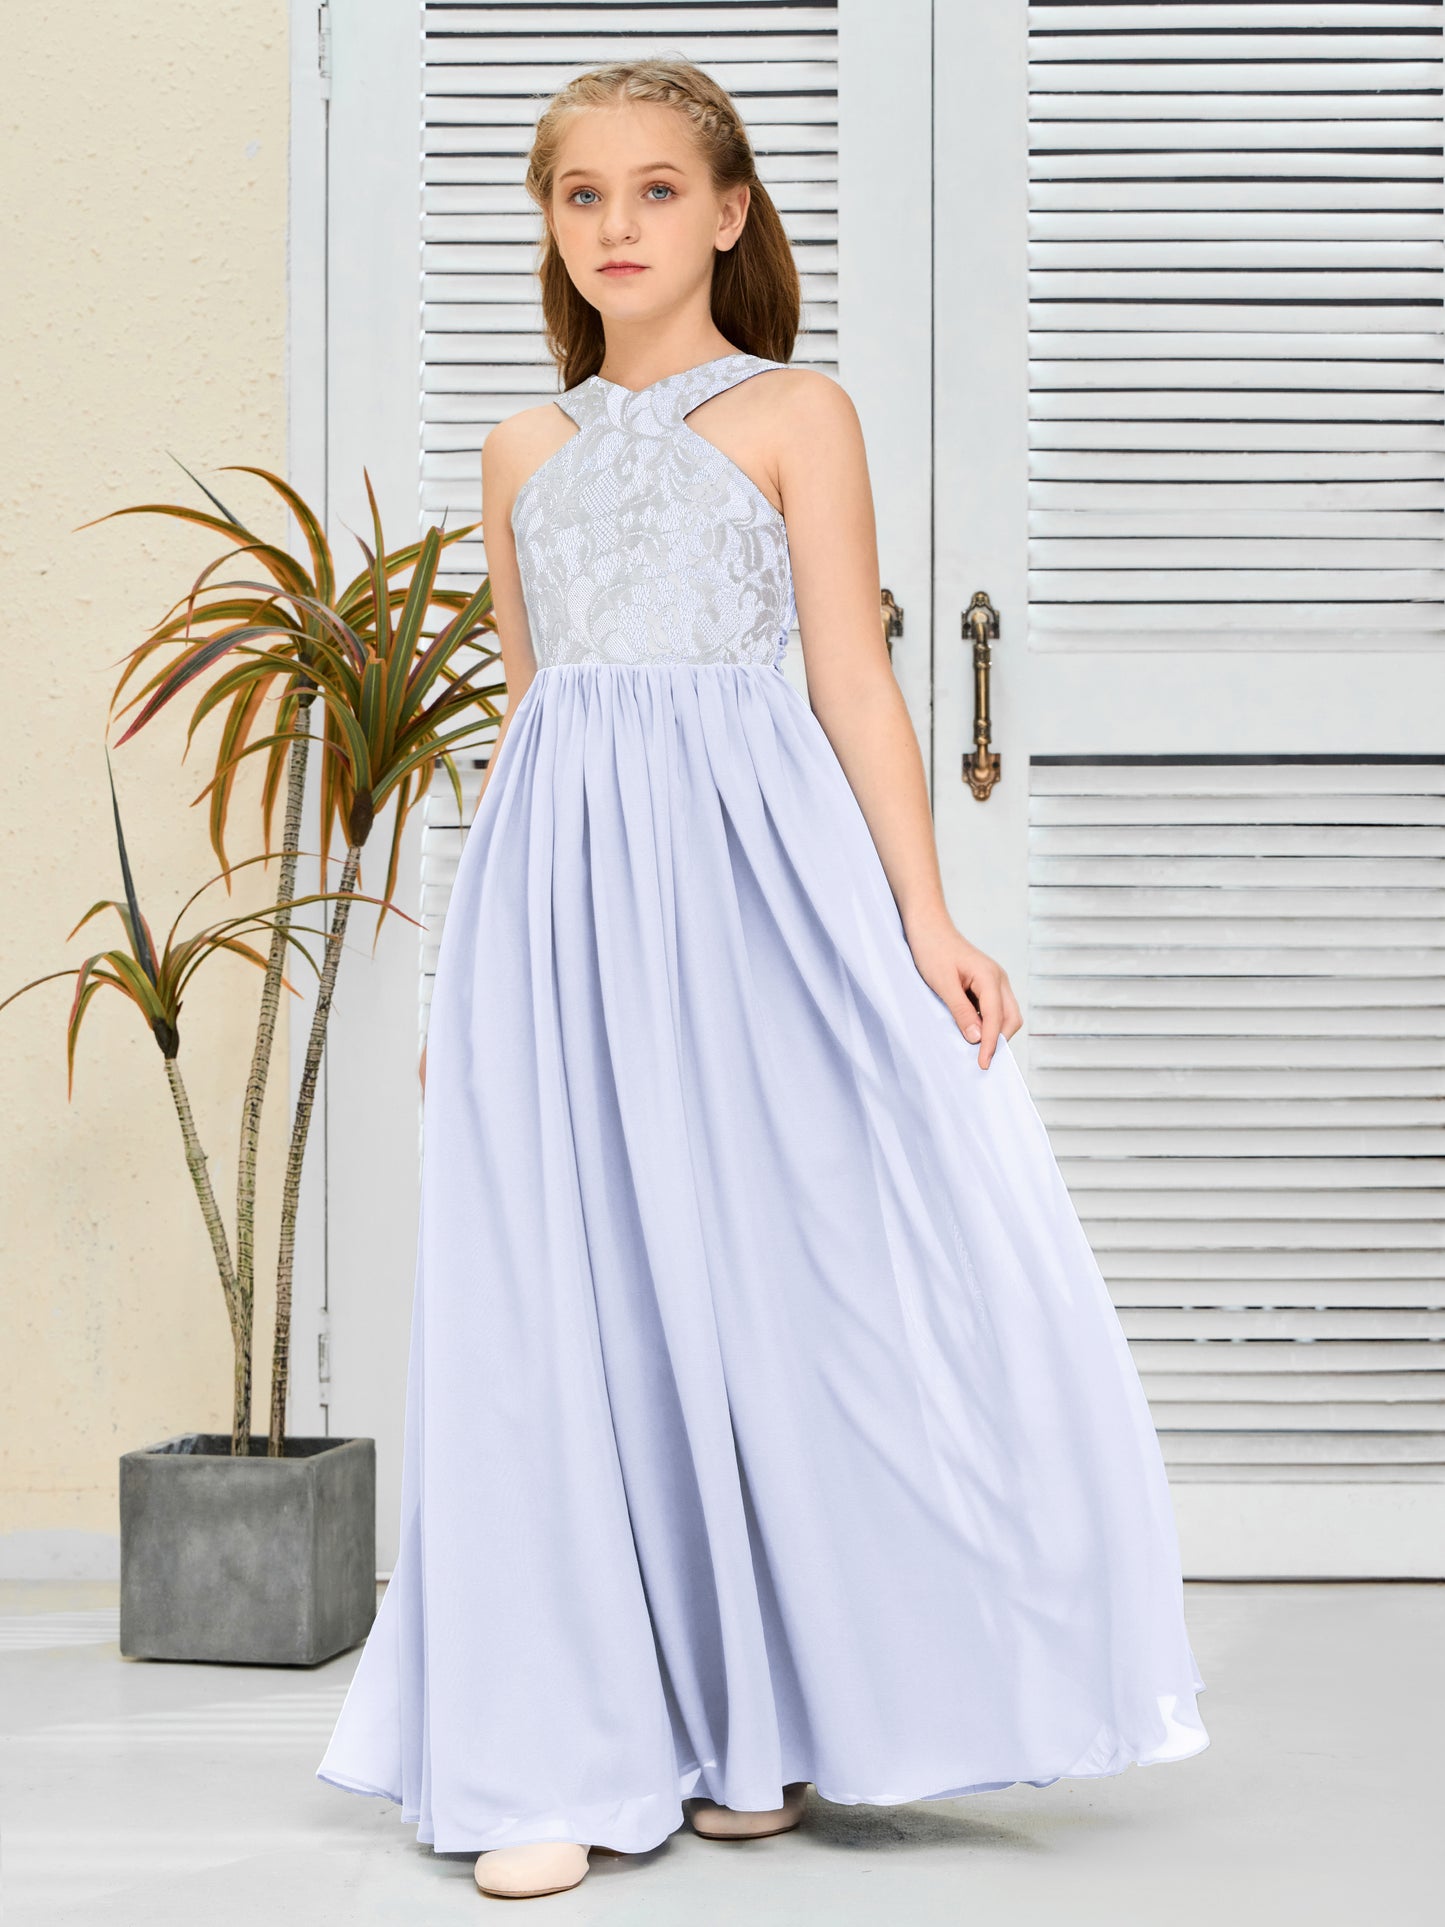 Lace Sleeveless Chiffon Junior Bridesmaid Dress With Belt